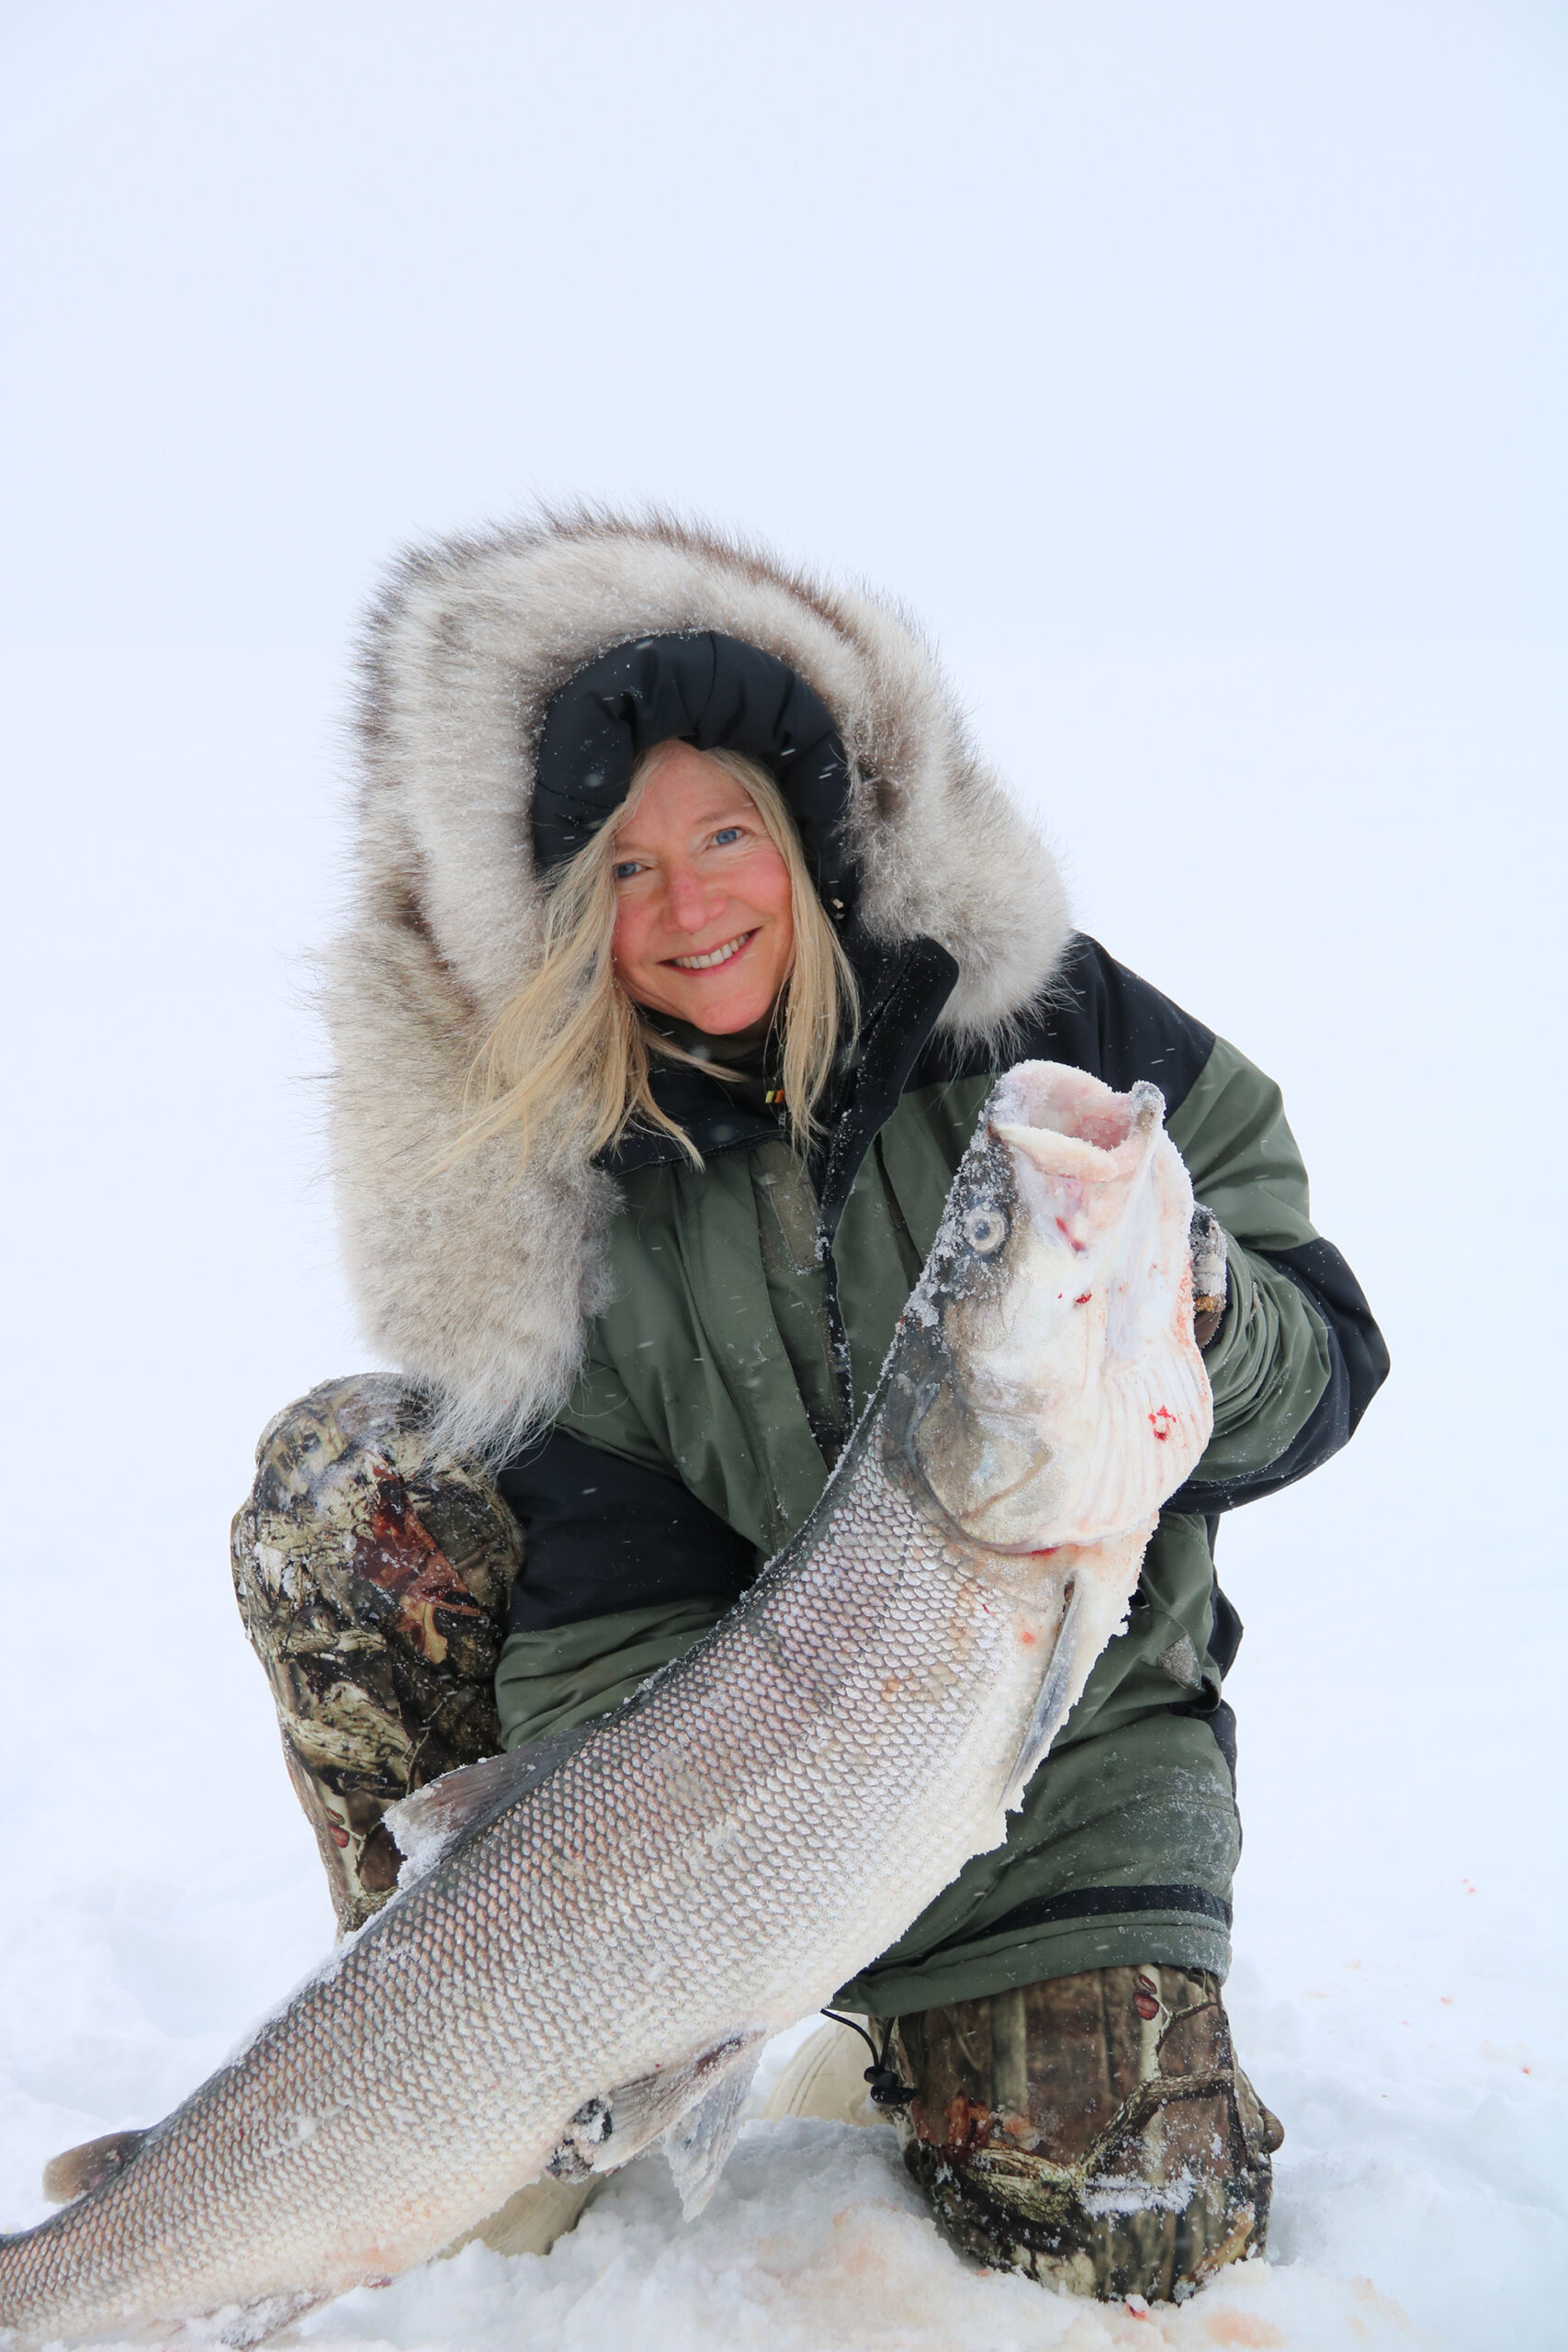 The Ice Fisherman Comes: Memories of Alaskan Winter Fishing